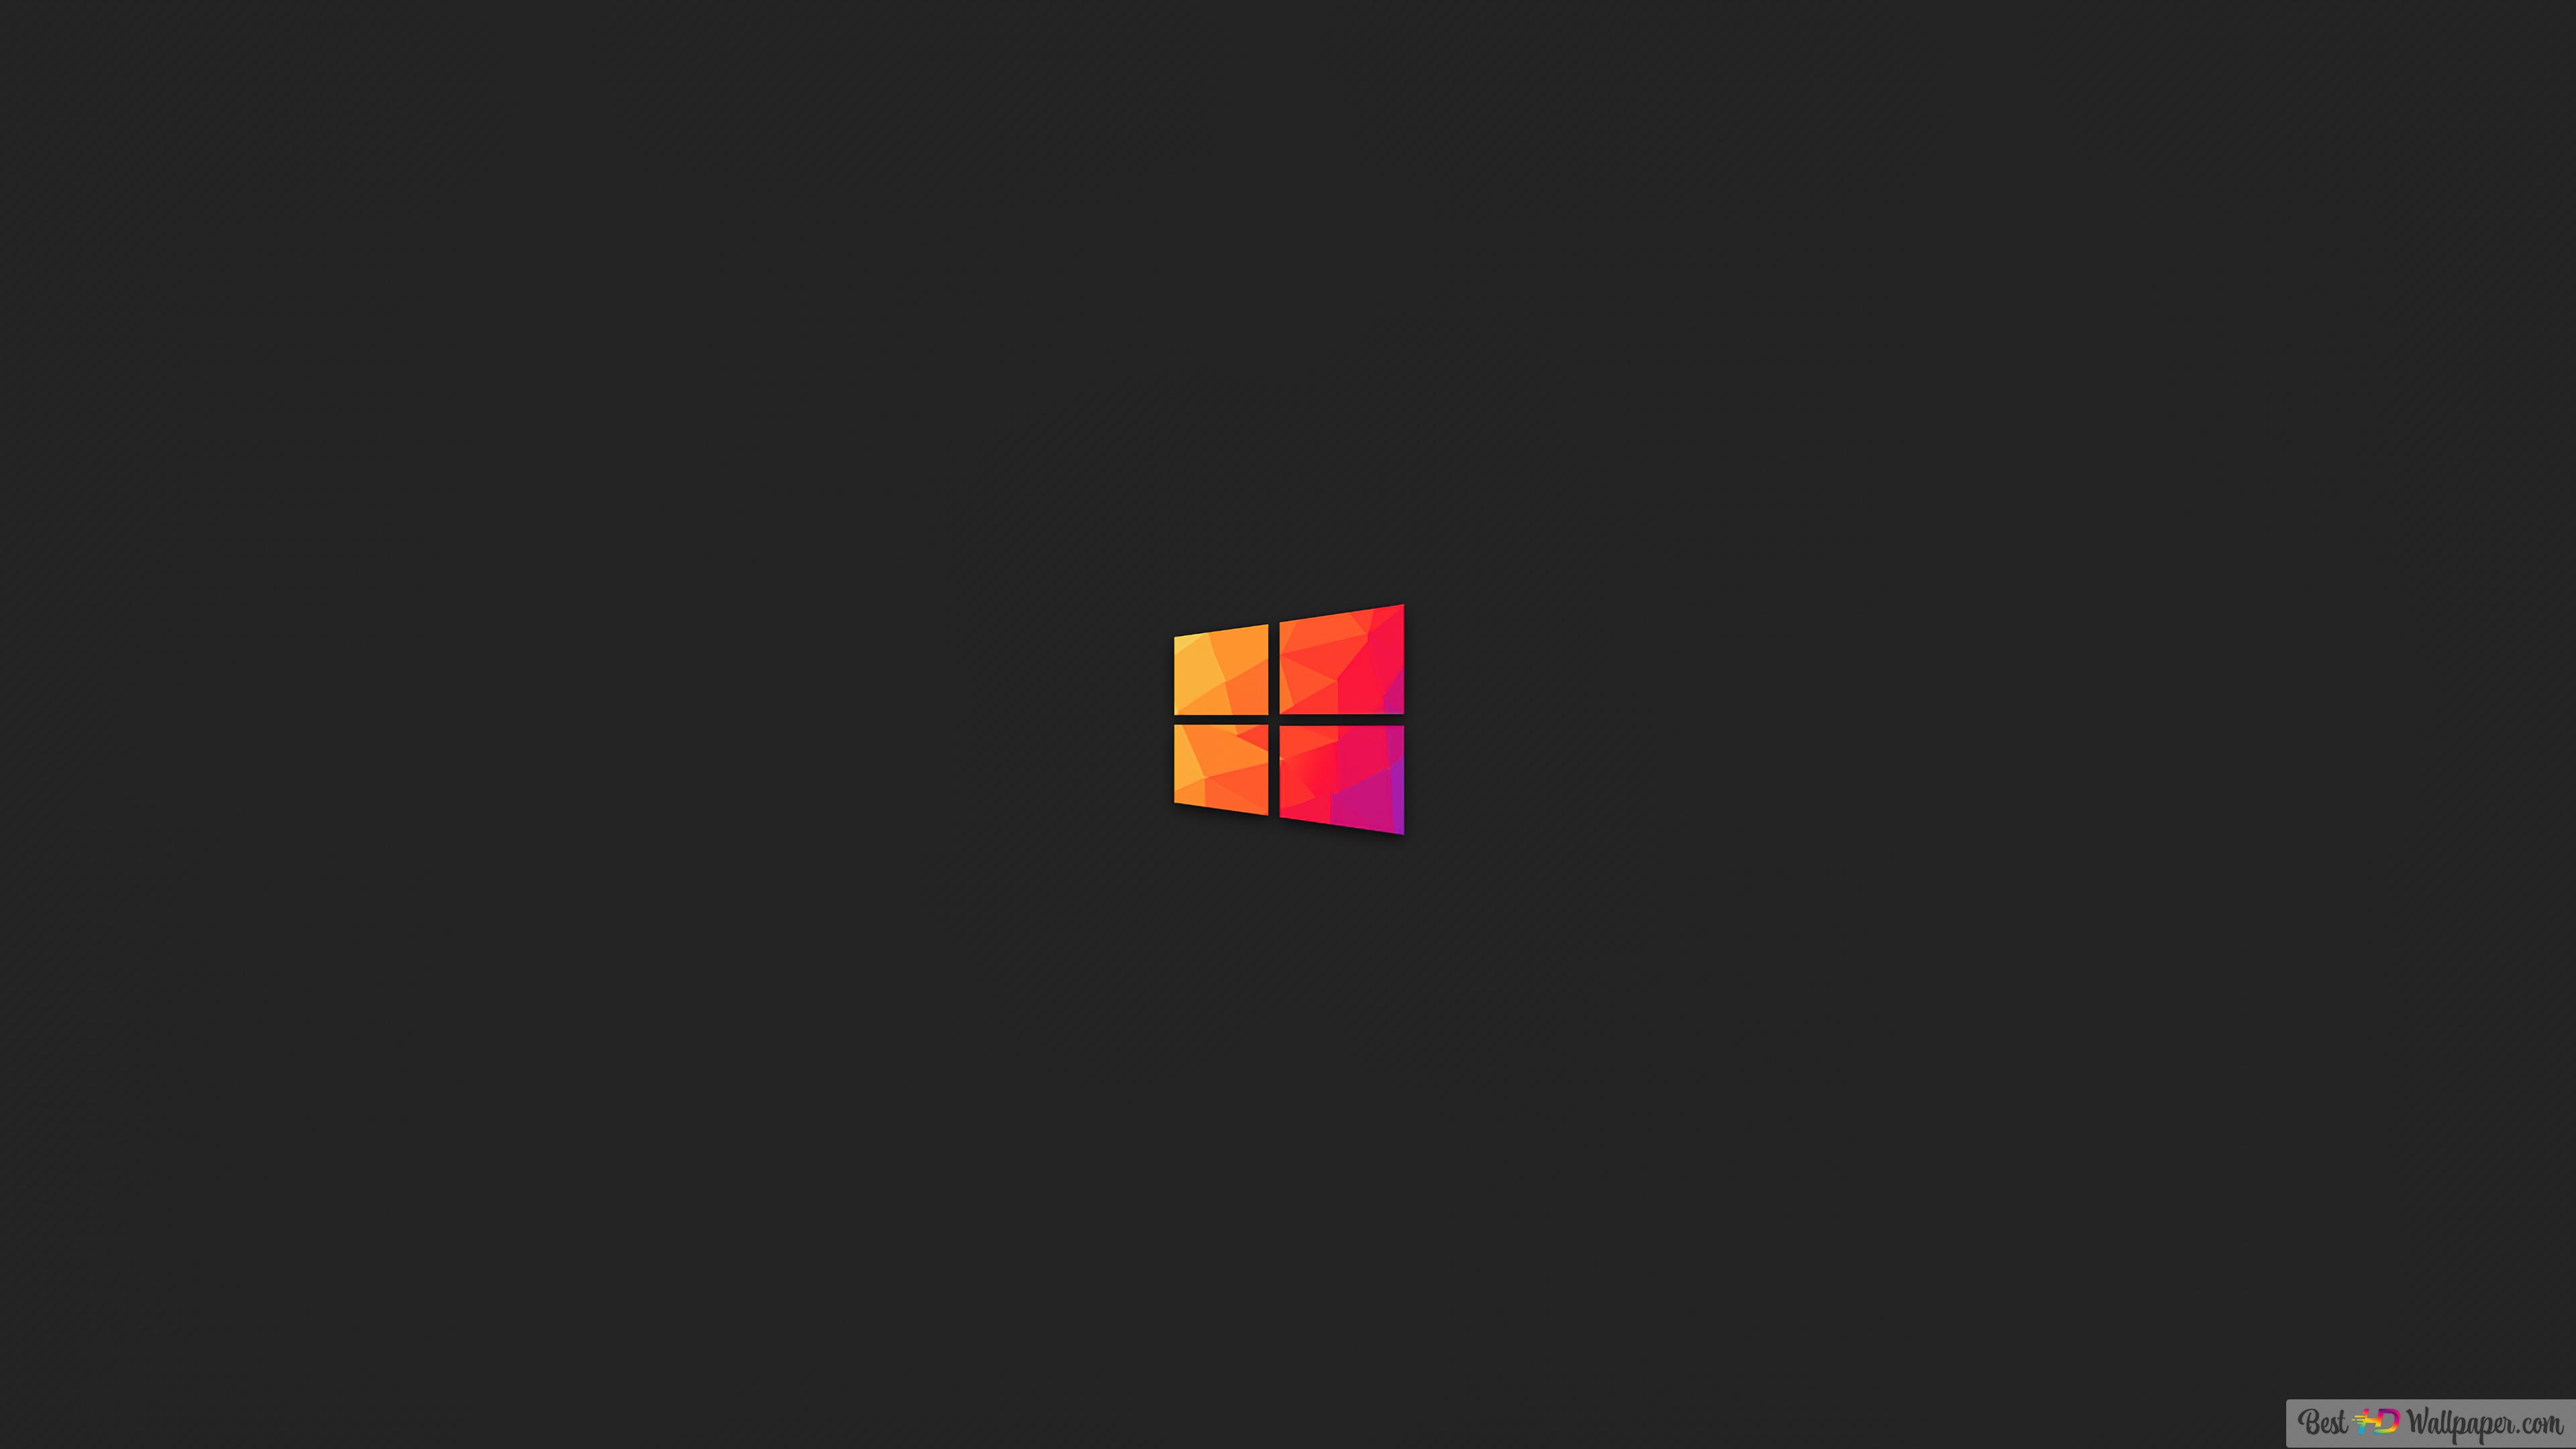 Windows logo k wallpaper download